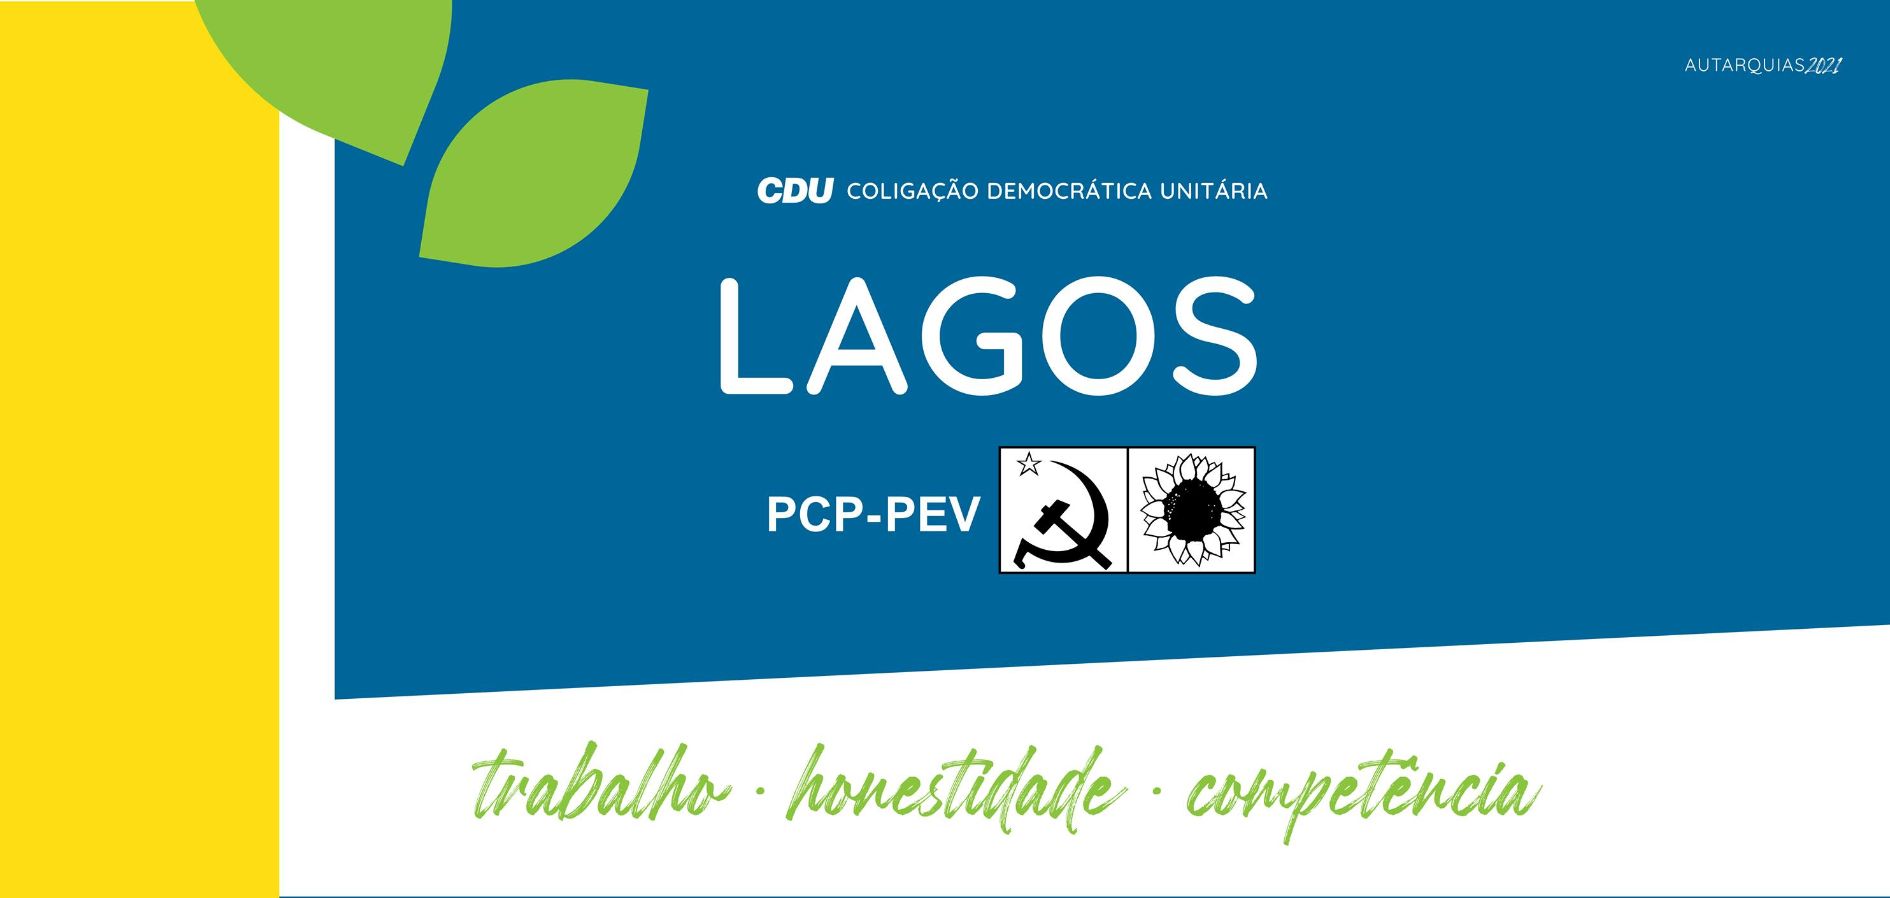 CDU recupera vereador na Câmara Municipal de Lagos